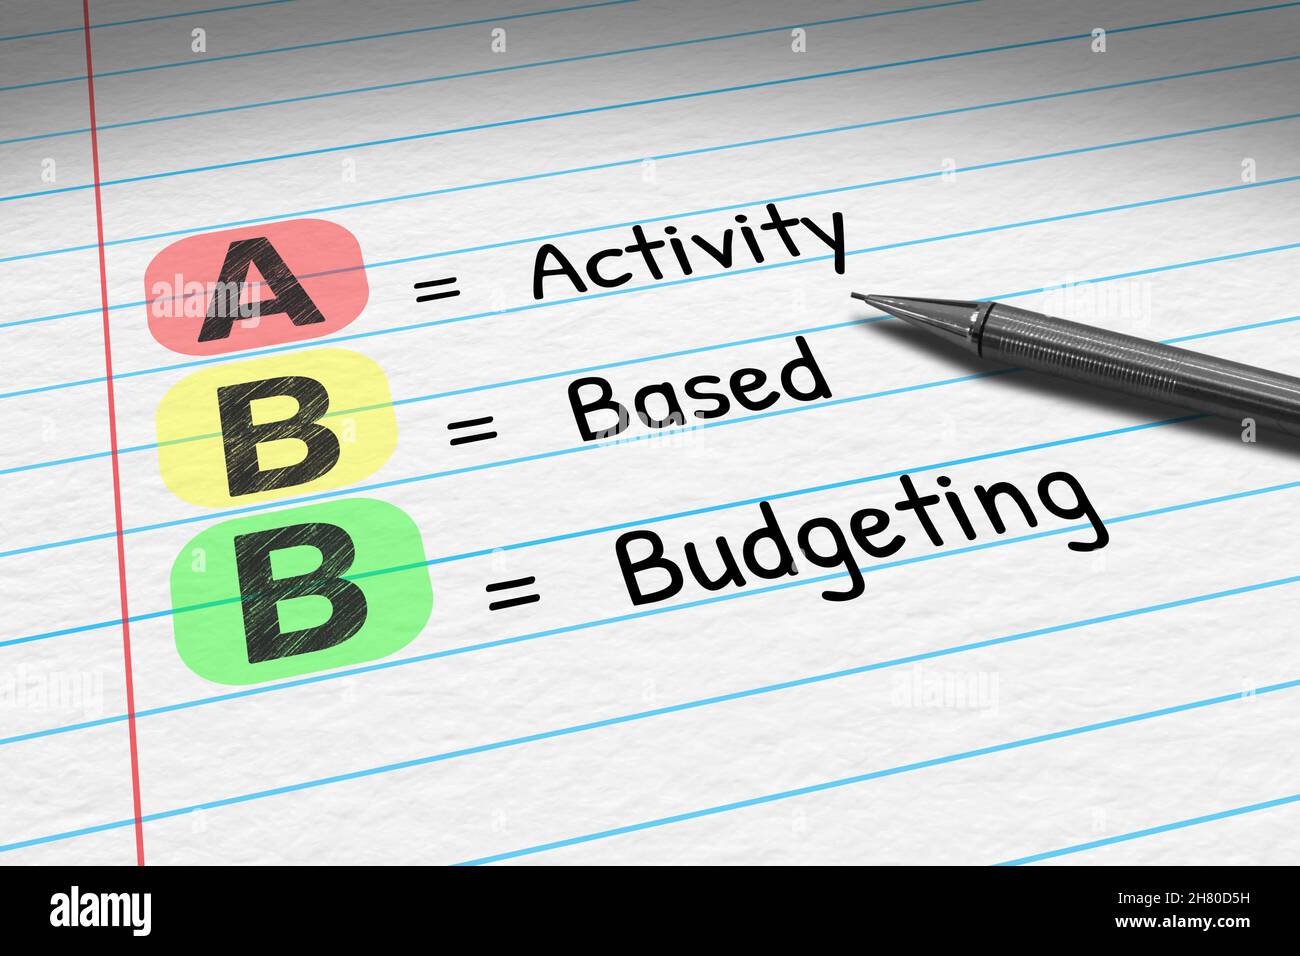 ABB - Activity Based Budgeting. Business acronym on note pad Stock Photo -  Alamy